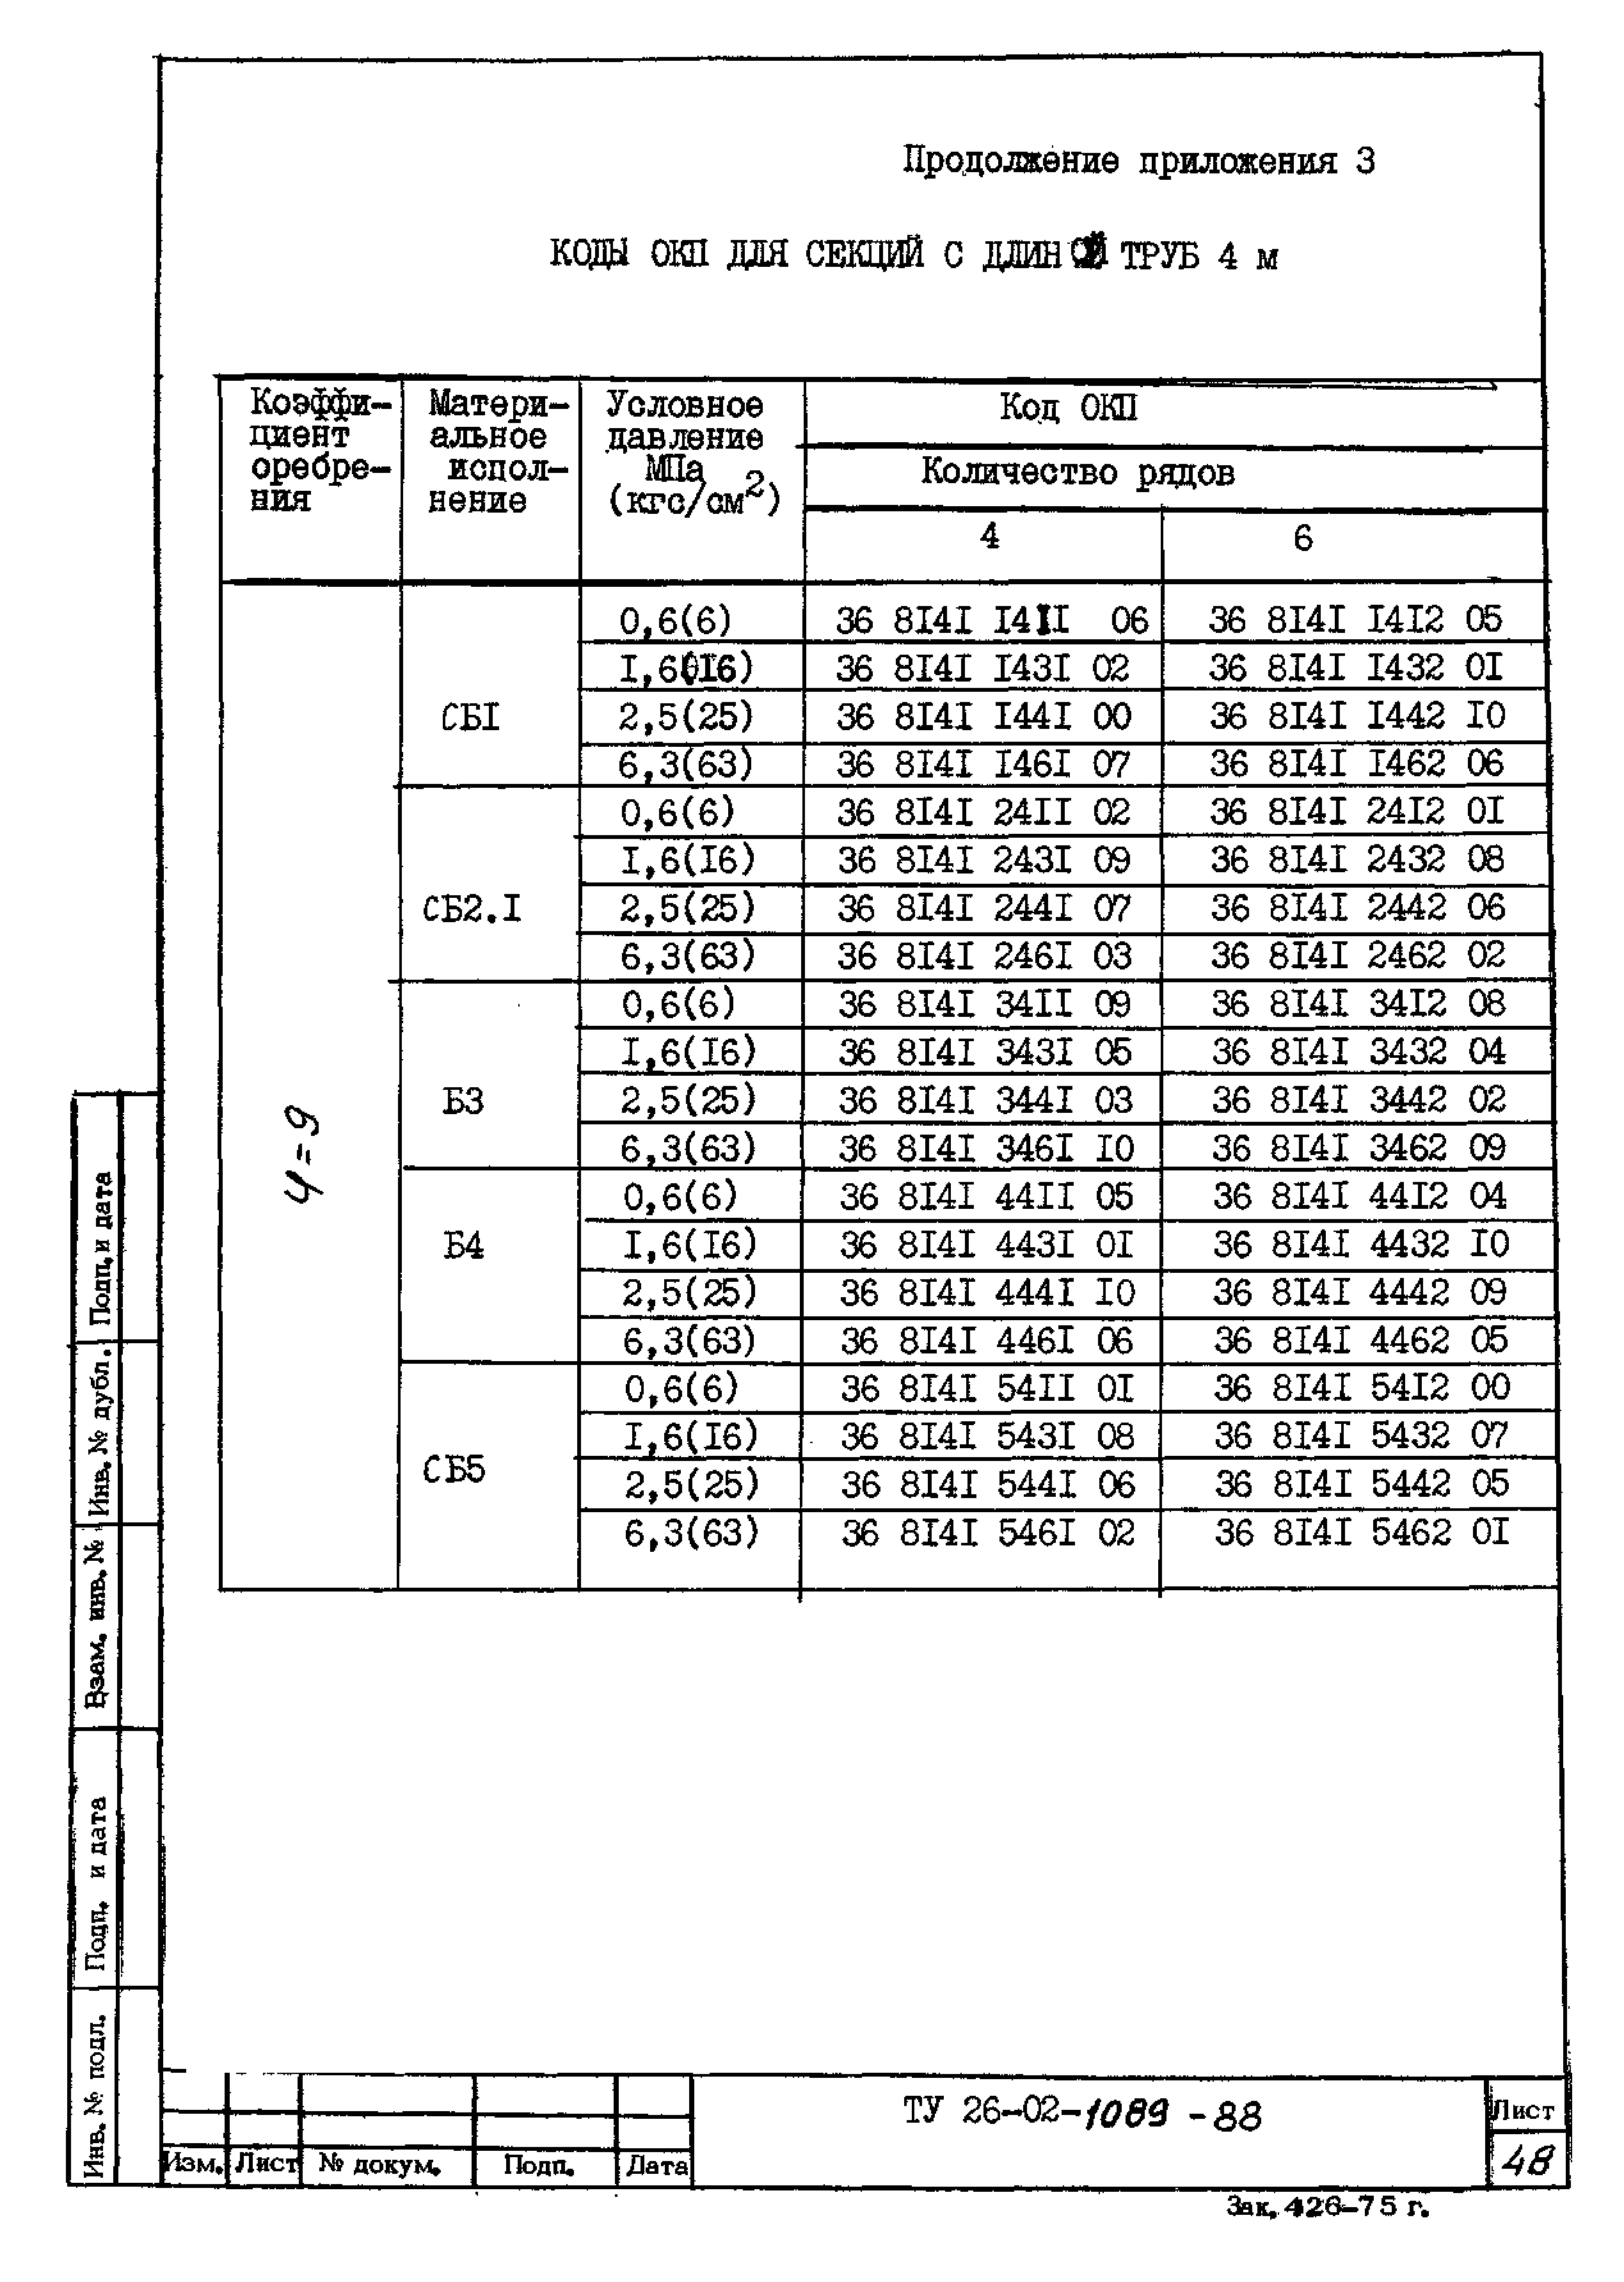 ТУ 26-02-1089-88